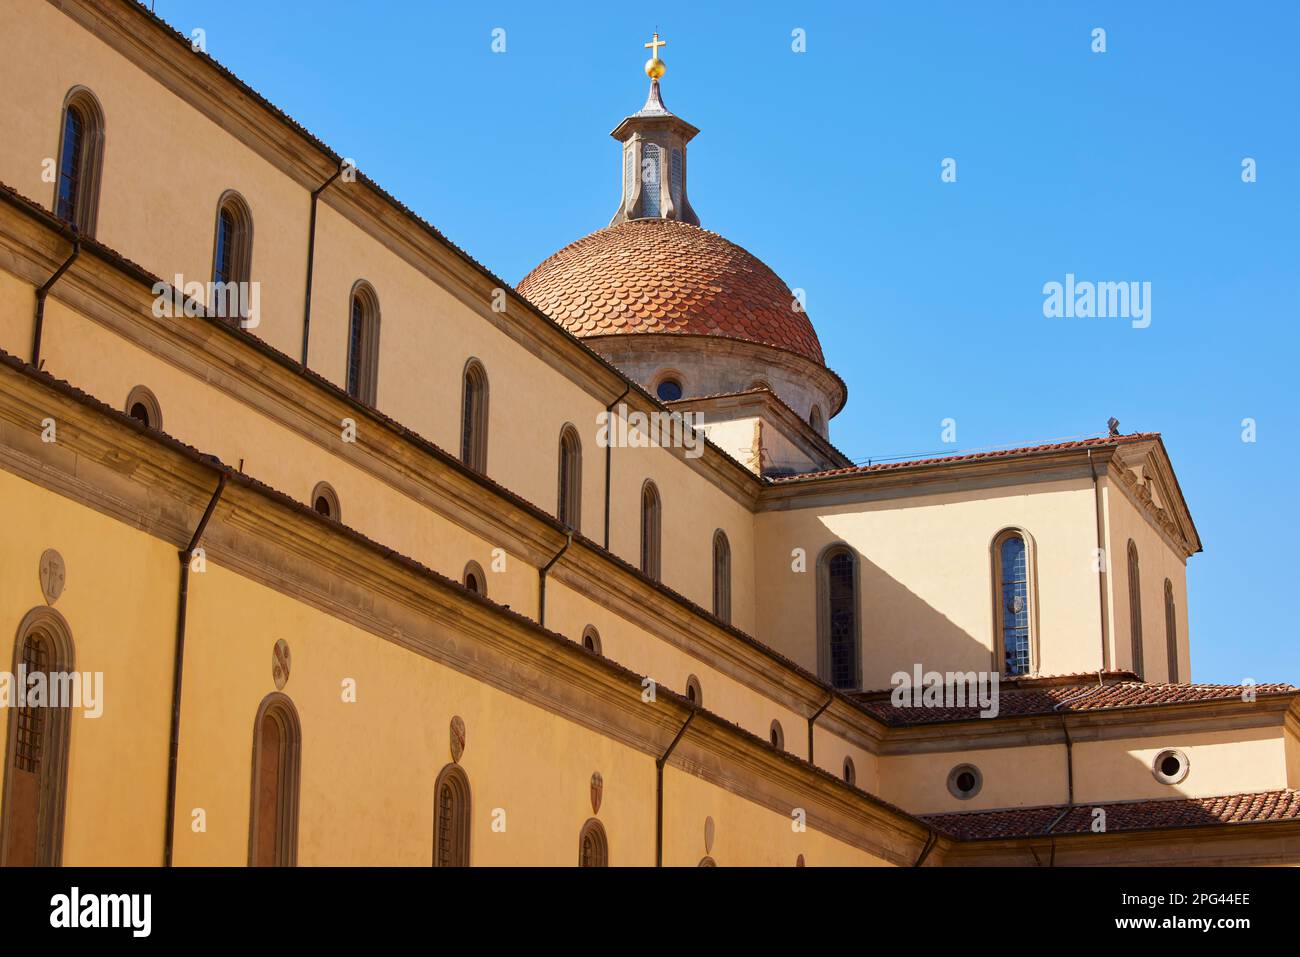 Dome and side view of Basilica di Santo Spirito, Florence, Italy Stock Photo